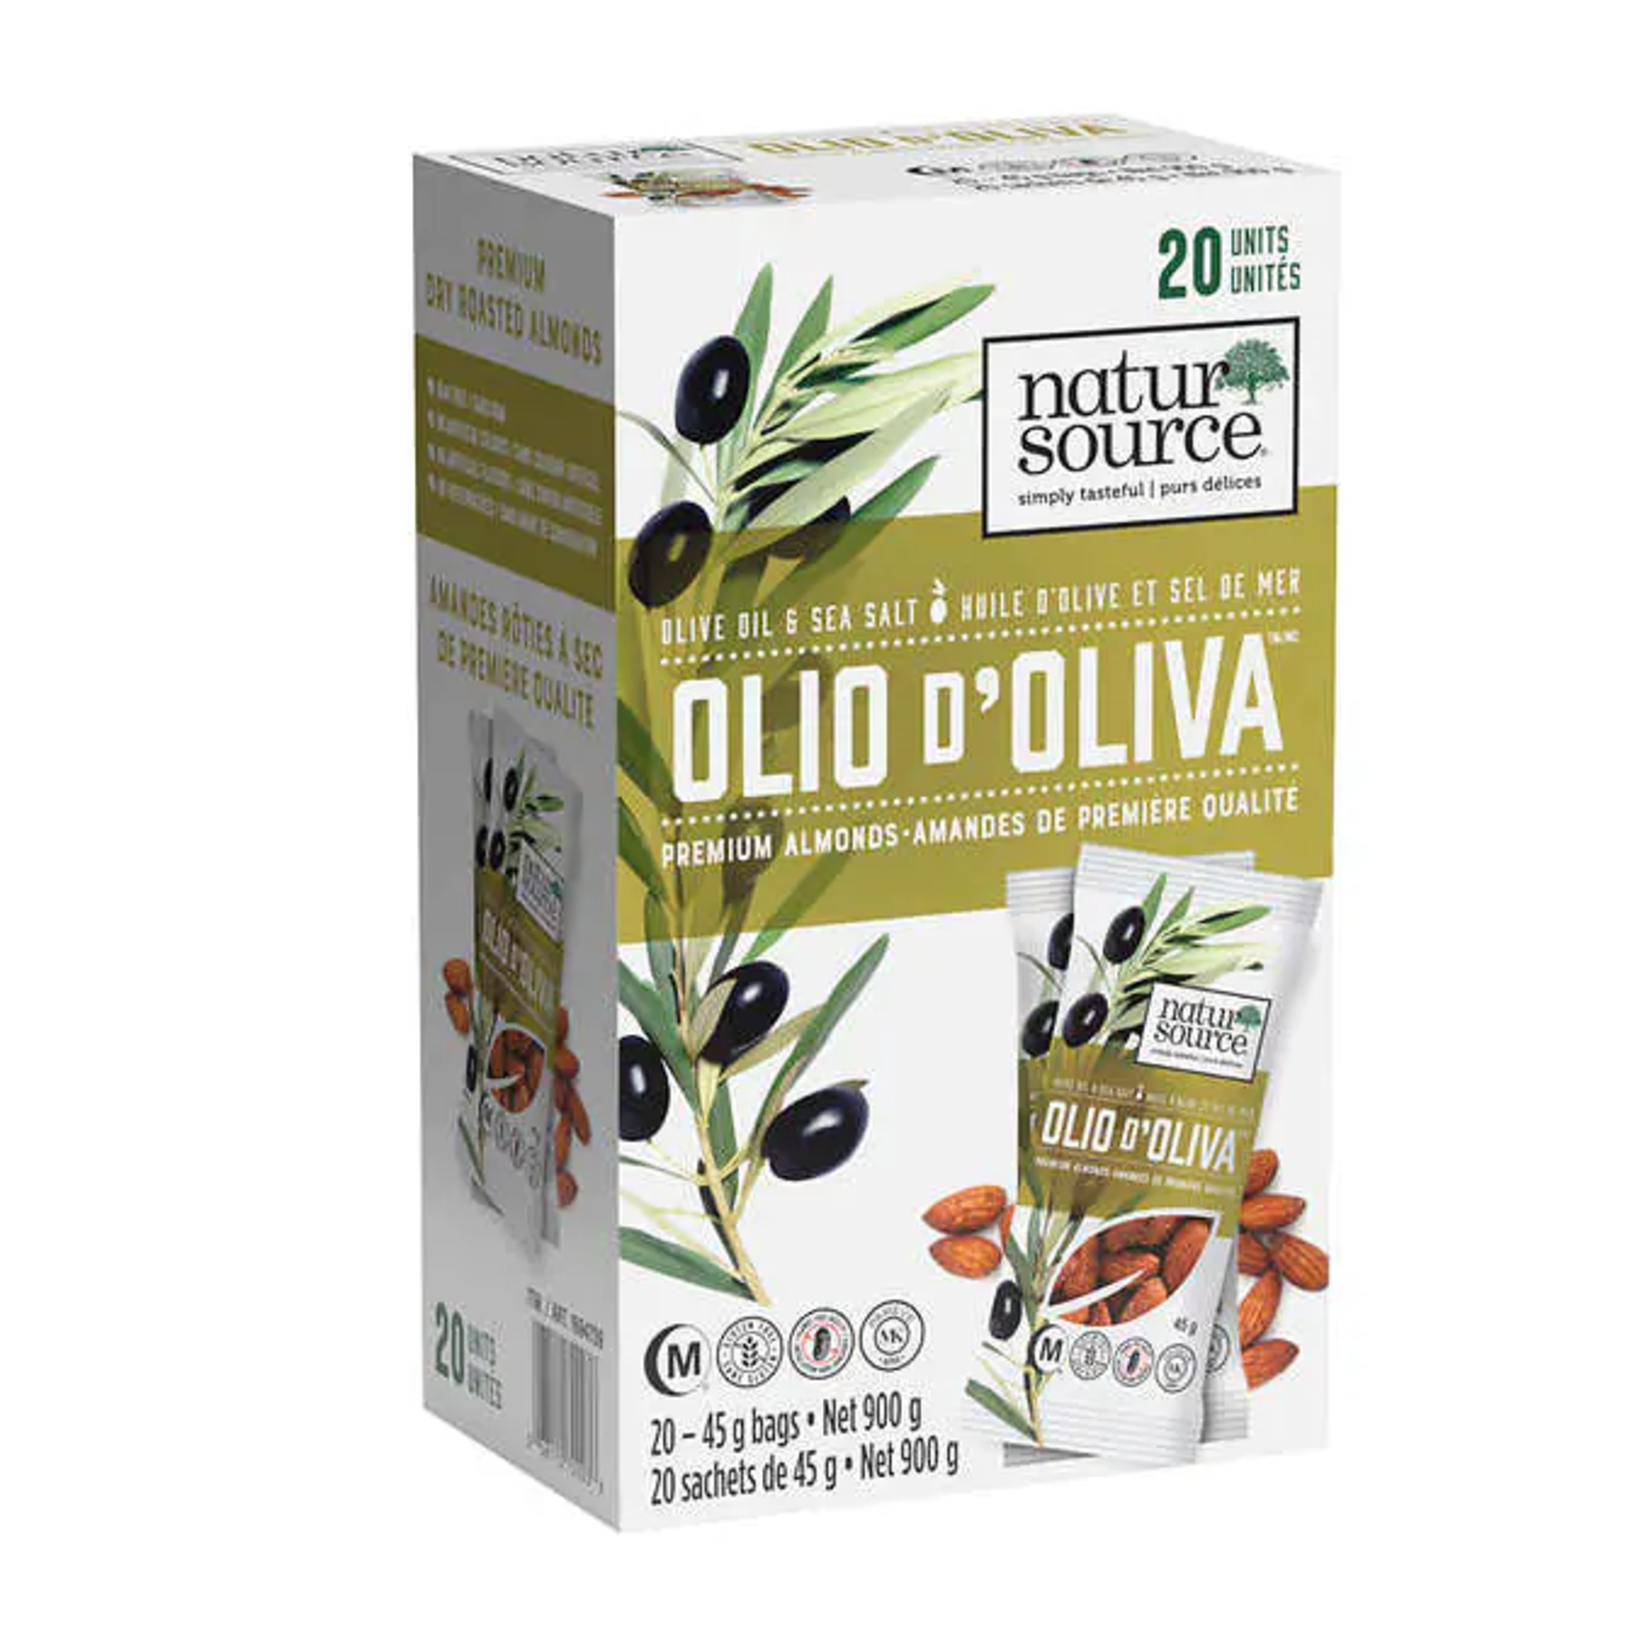 NaturSource Olio d'Oliva Olive Oil & Sea Salt Almonds, 20 × 45 g